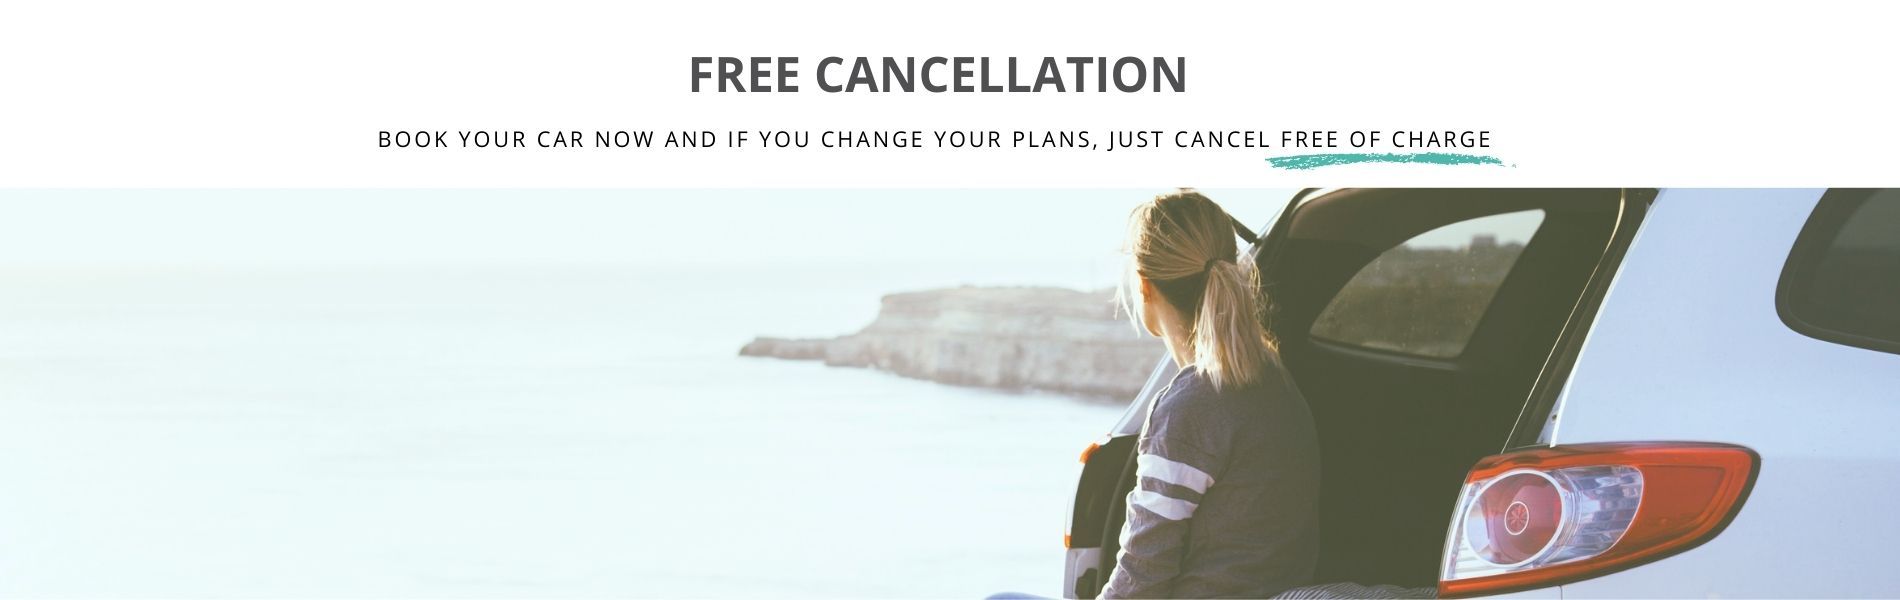 FREE Cancellation